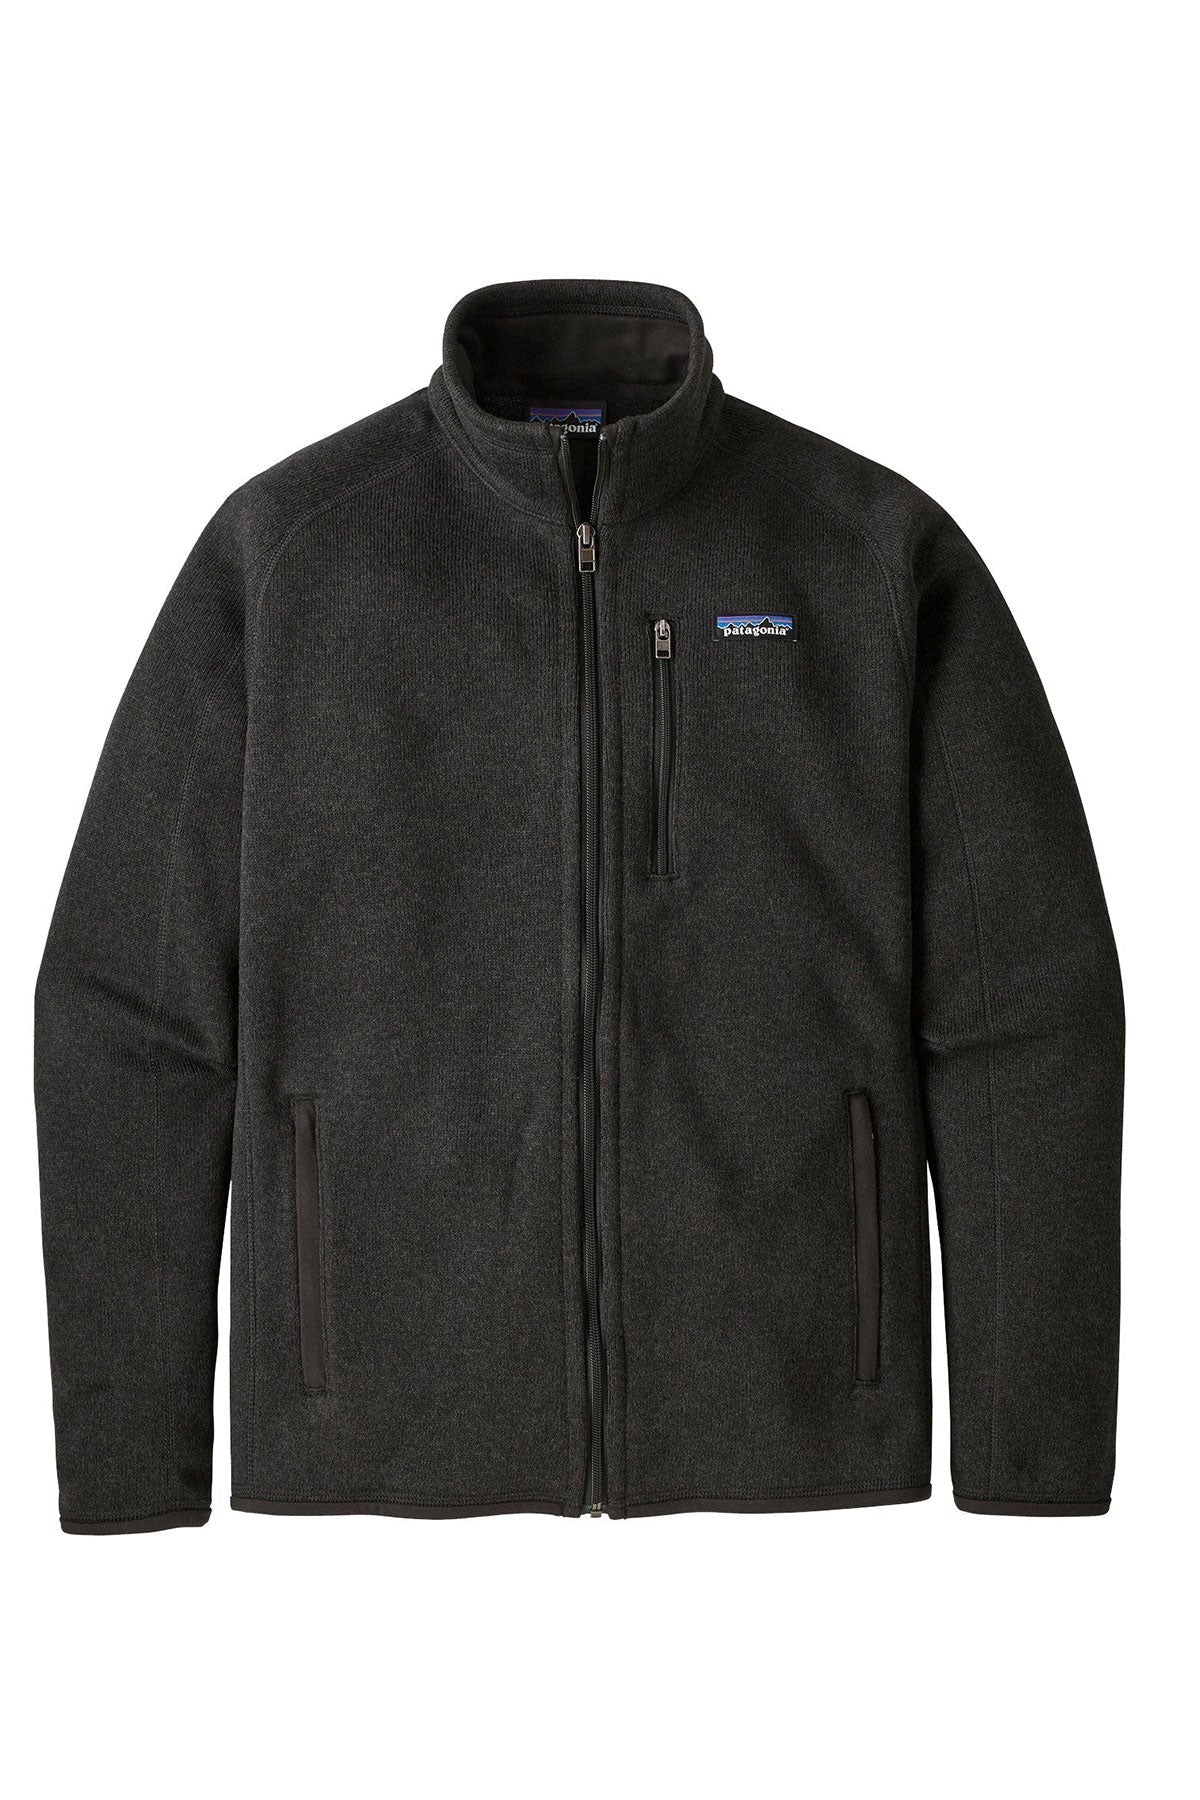 Patagonia Mens Better Sweater Custom Fleece Jackets, Black